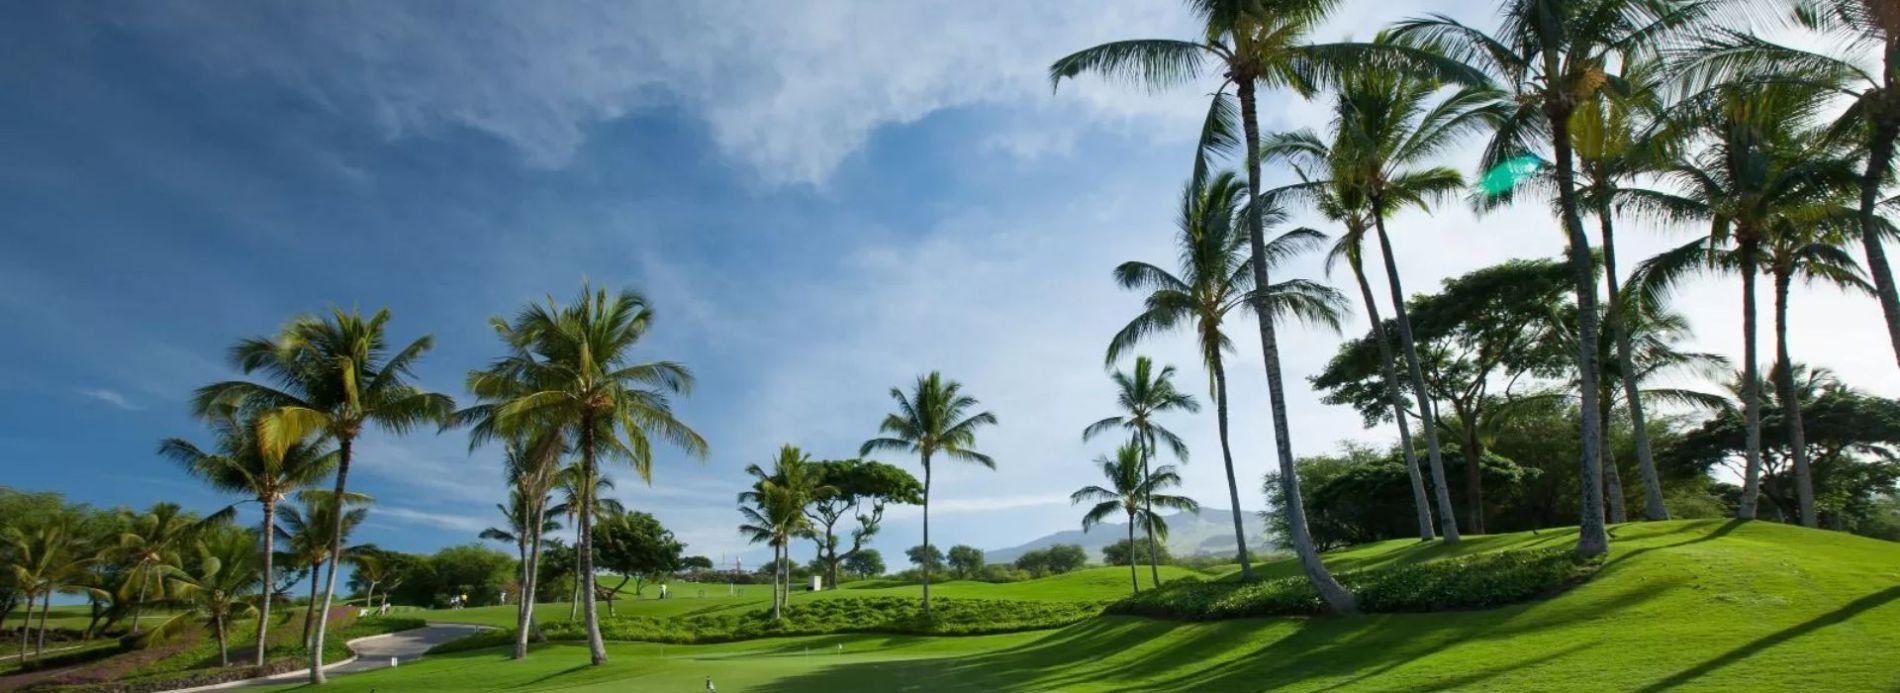 Golf course in Kauai